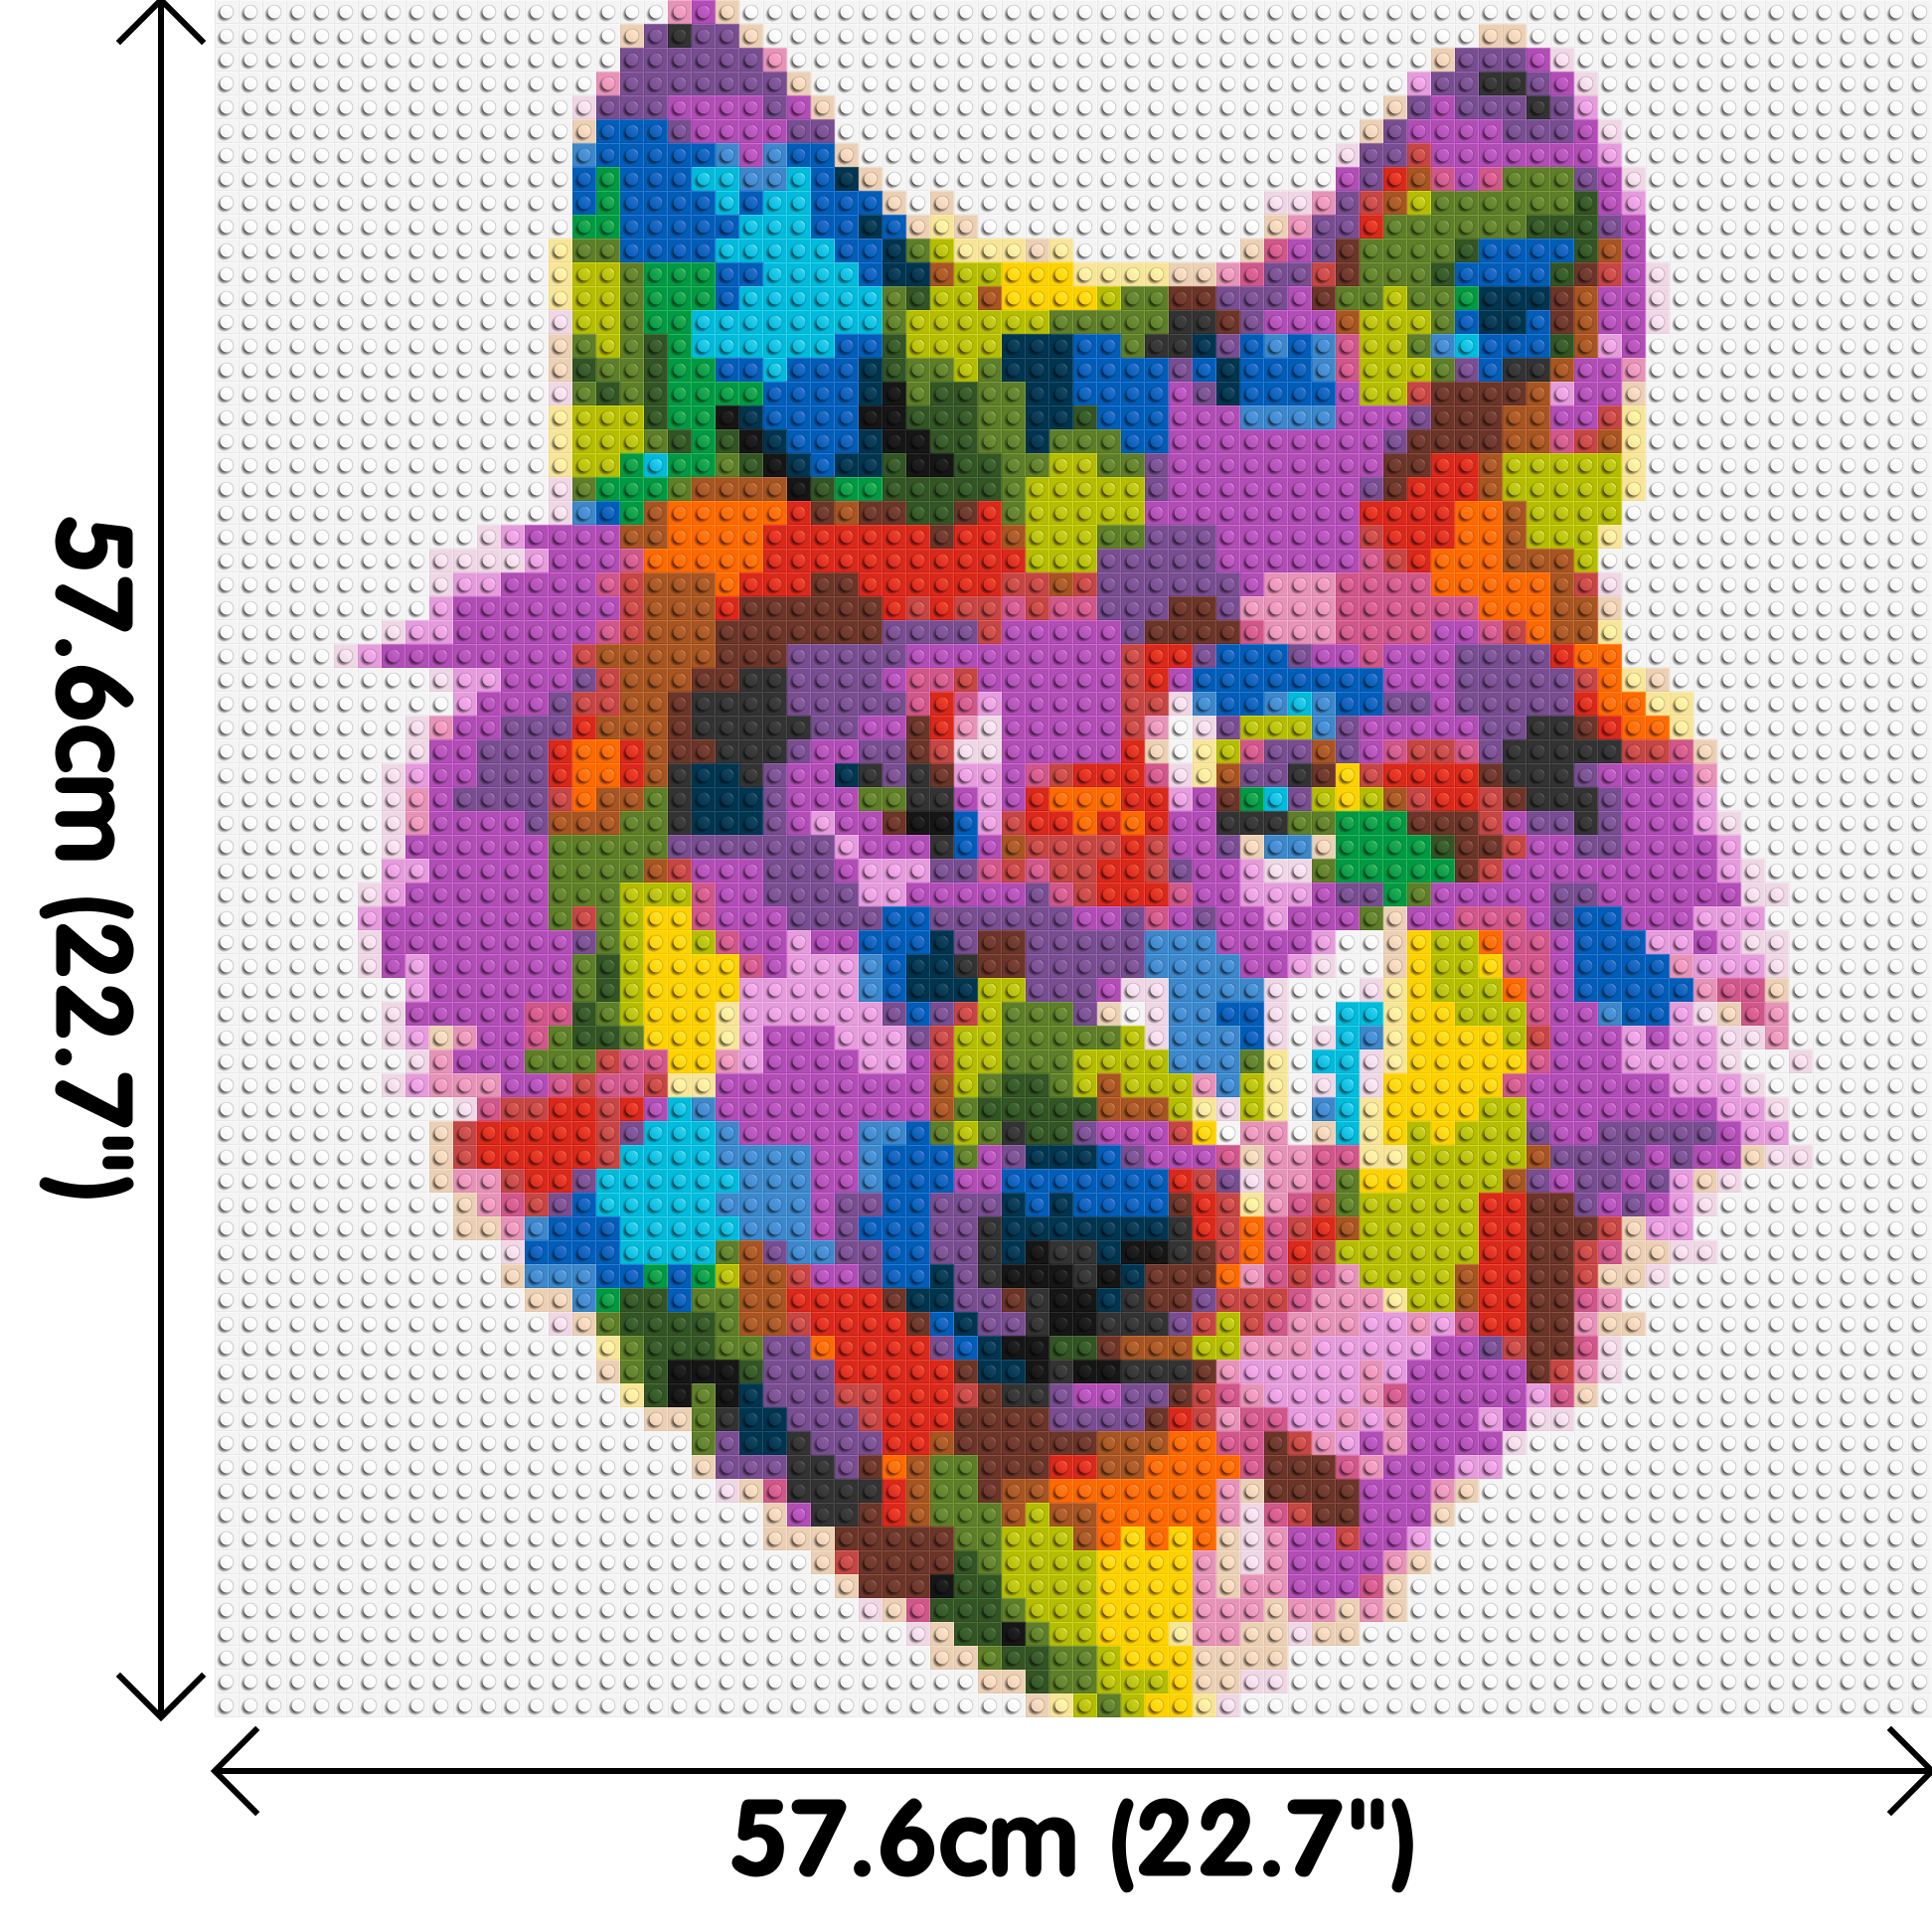 Wolf Colourful Pop Art - Brick Art Mosaic Kit 3x3 dimensions